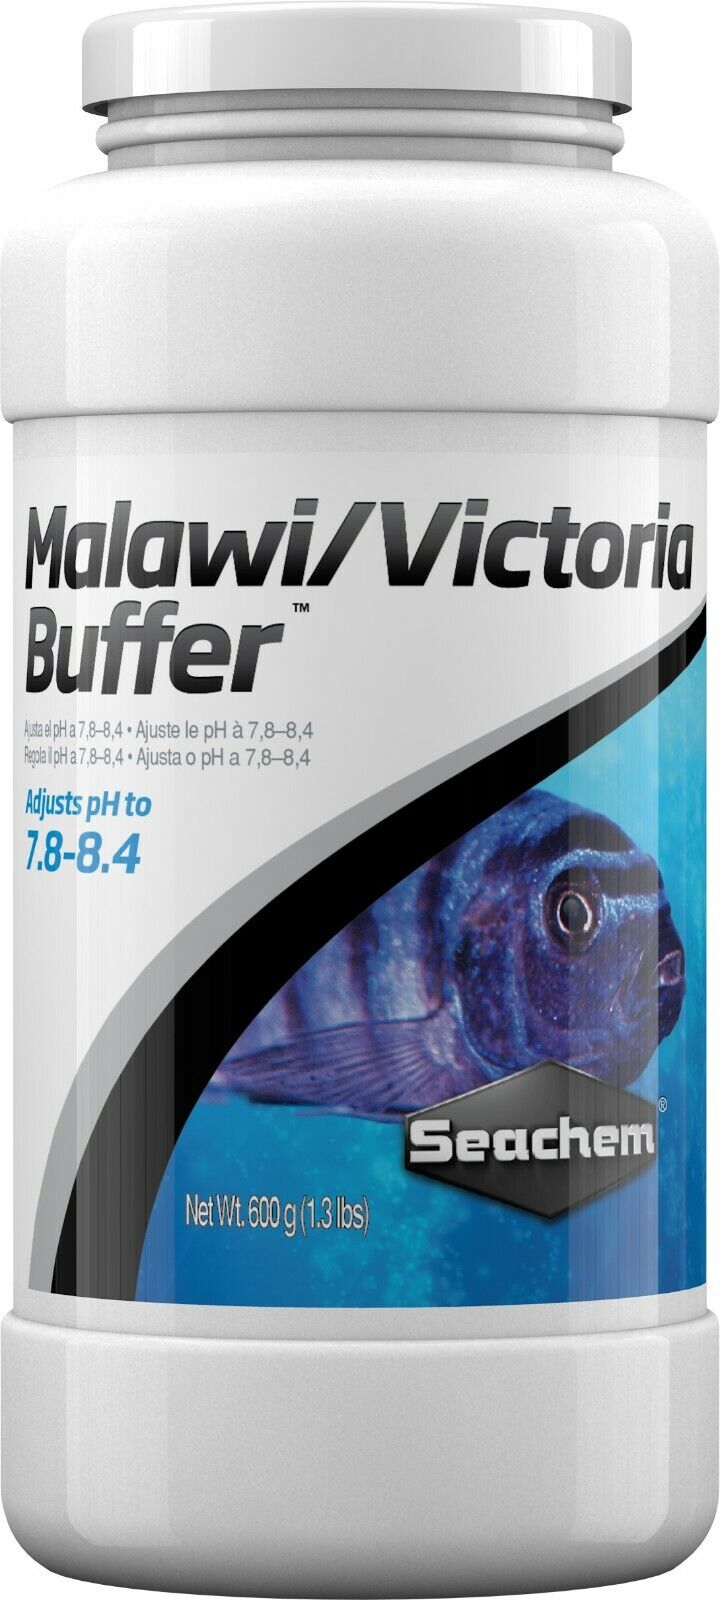 Seachem Malawi / Victoria Buffer